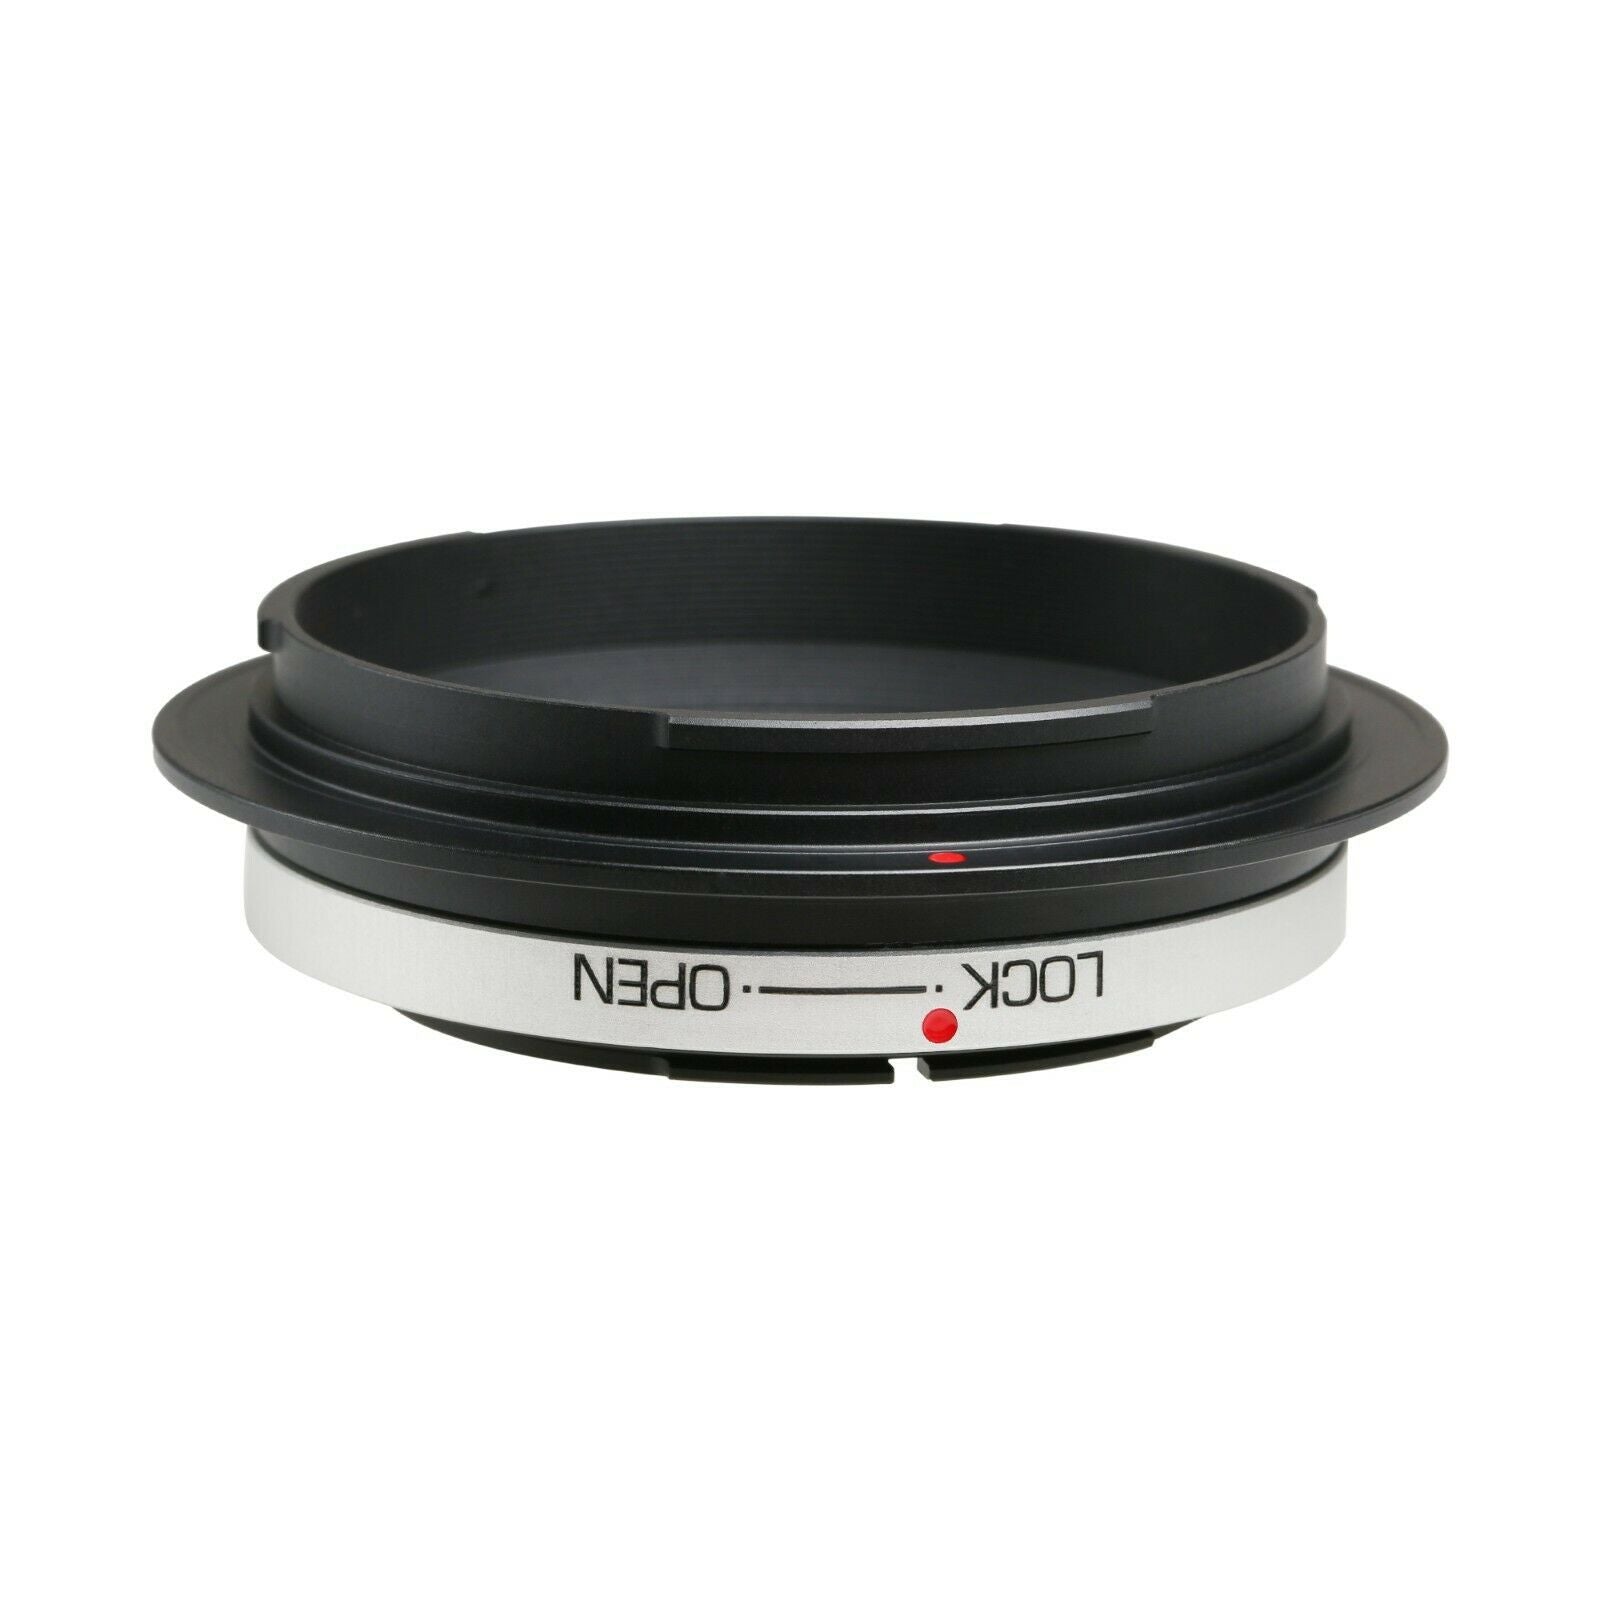 Kipon FD-GFX lens adapter for Canon FD mount lens to Fujifilm G-Mount Fuji GFX medium format mirrorless camera Pro Adapter - GFX 50S 100S